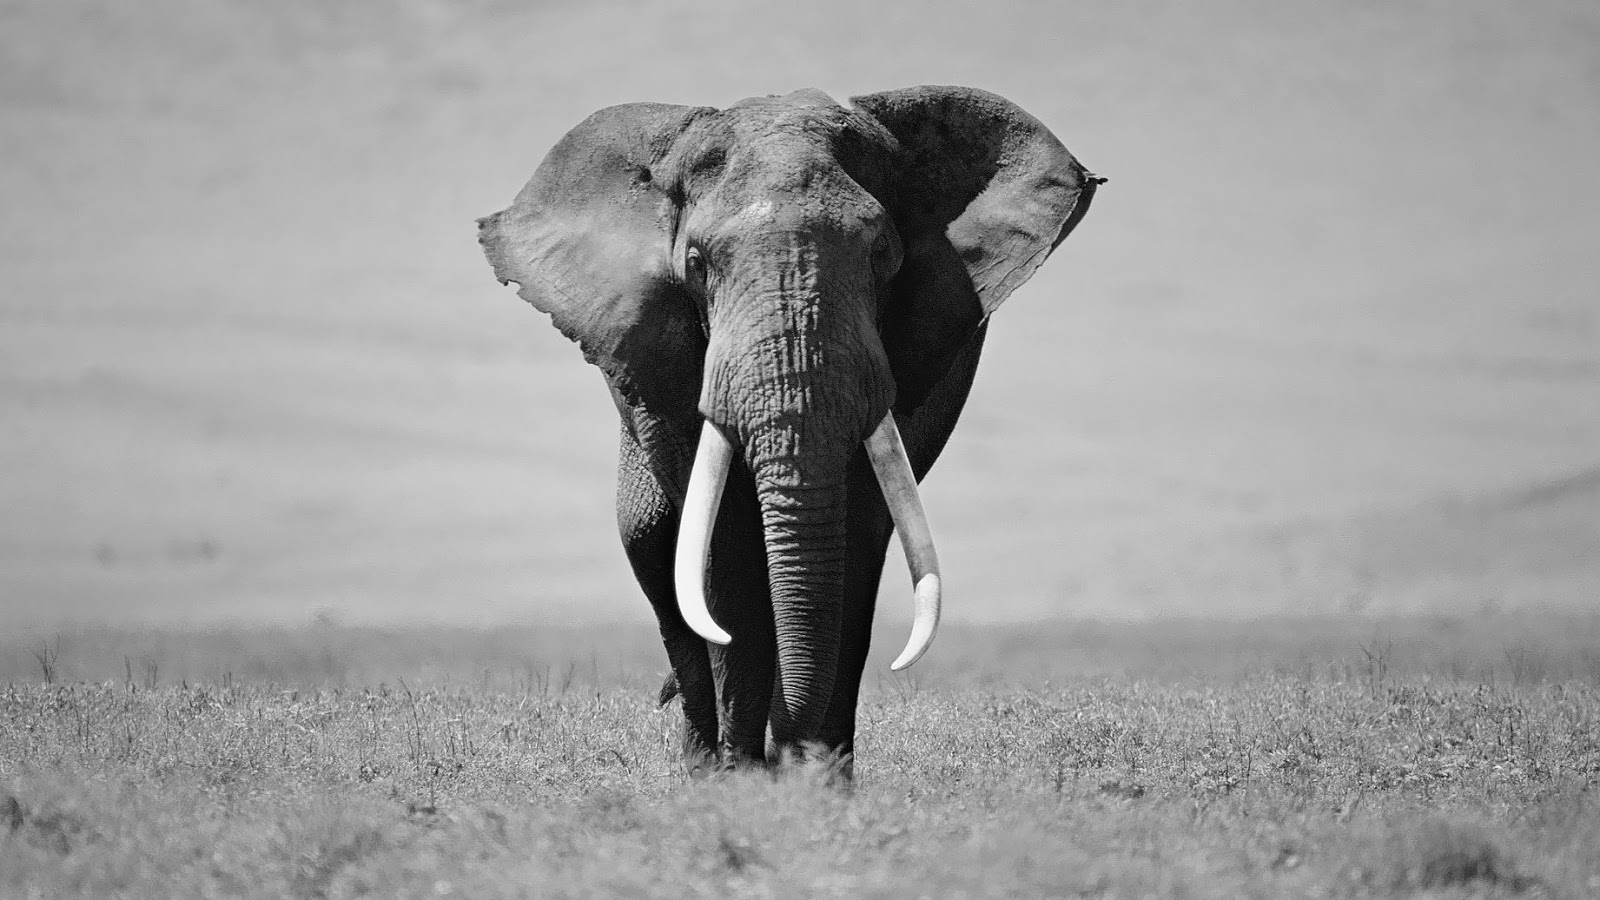 Happy World Elephant Day Xo We Cannot Afford To Lose Elephants